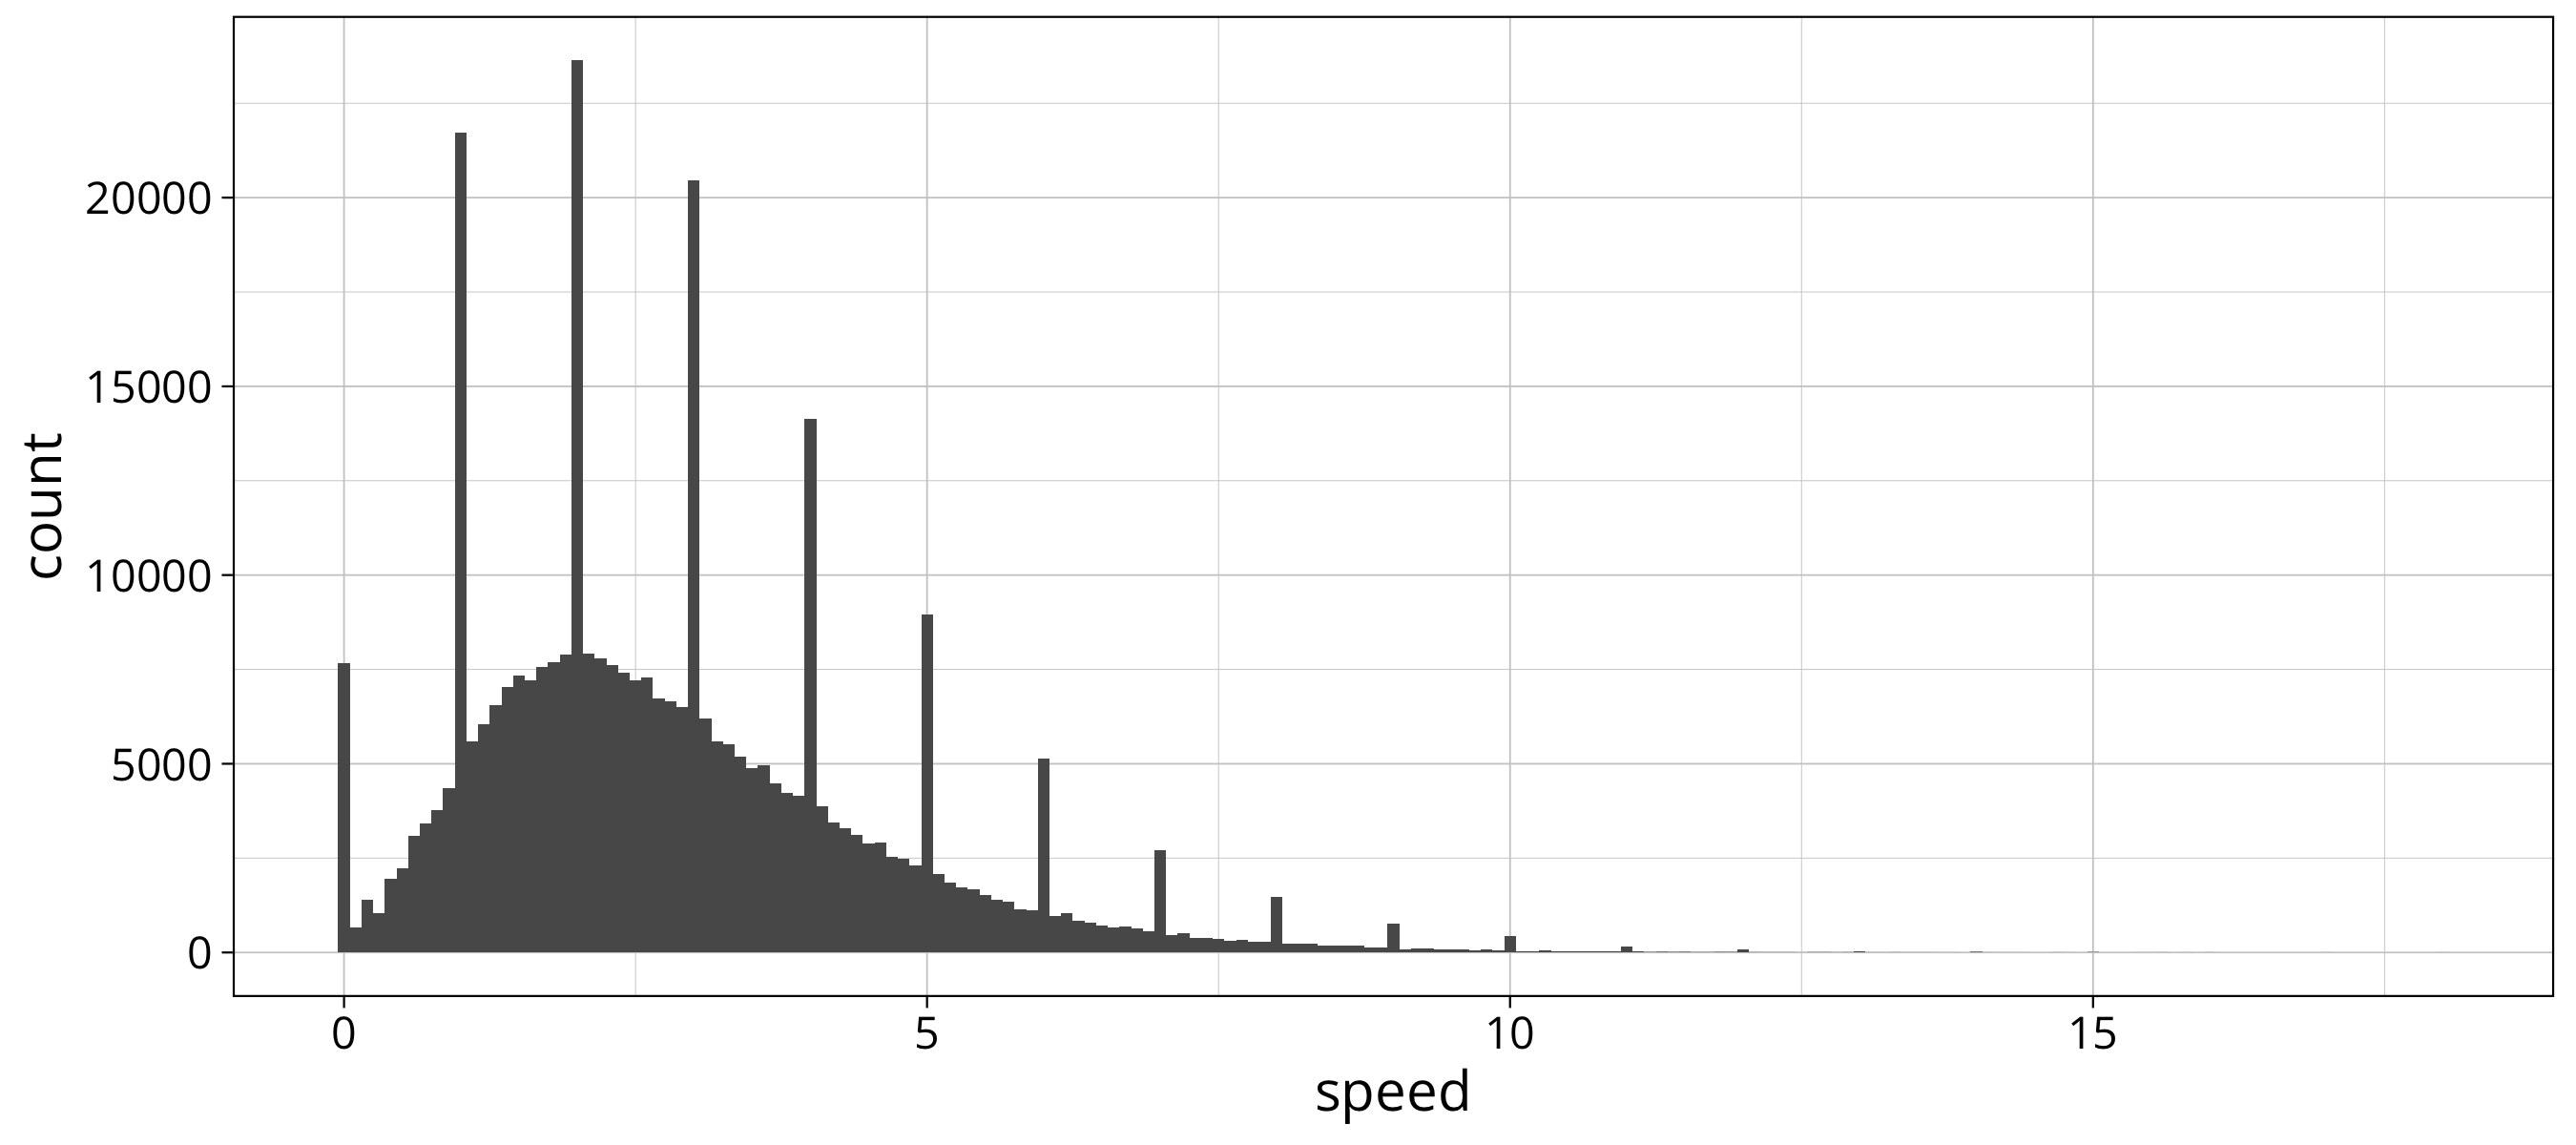 plot of chunk histogram of wind data